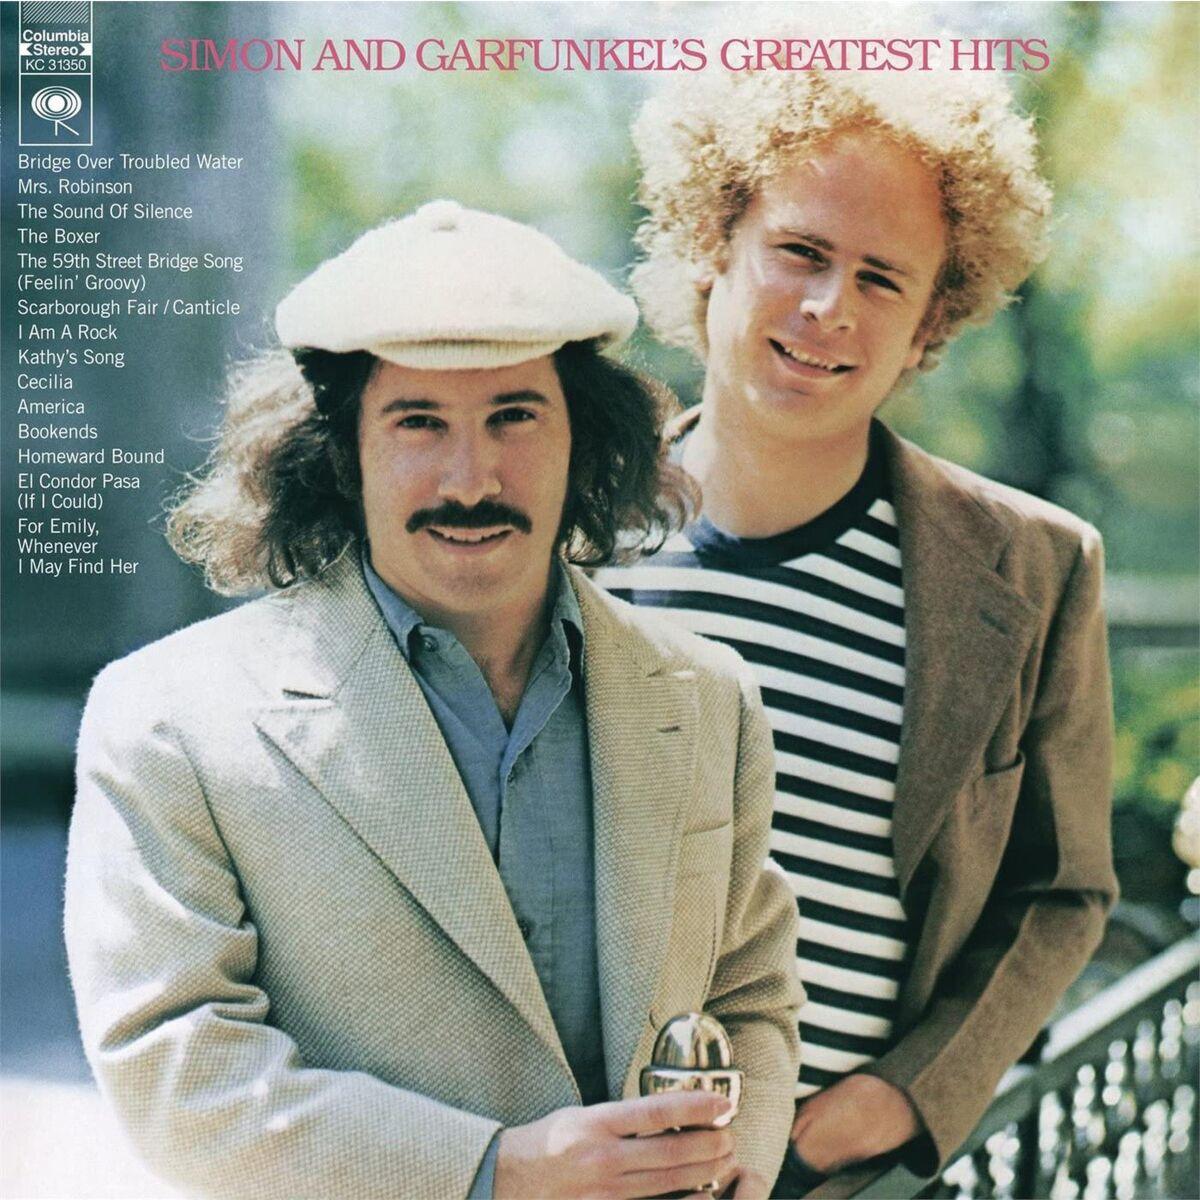 Simon and Garfunkel Greatest Hits (Coloured) LP